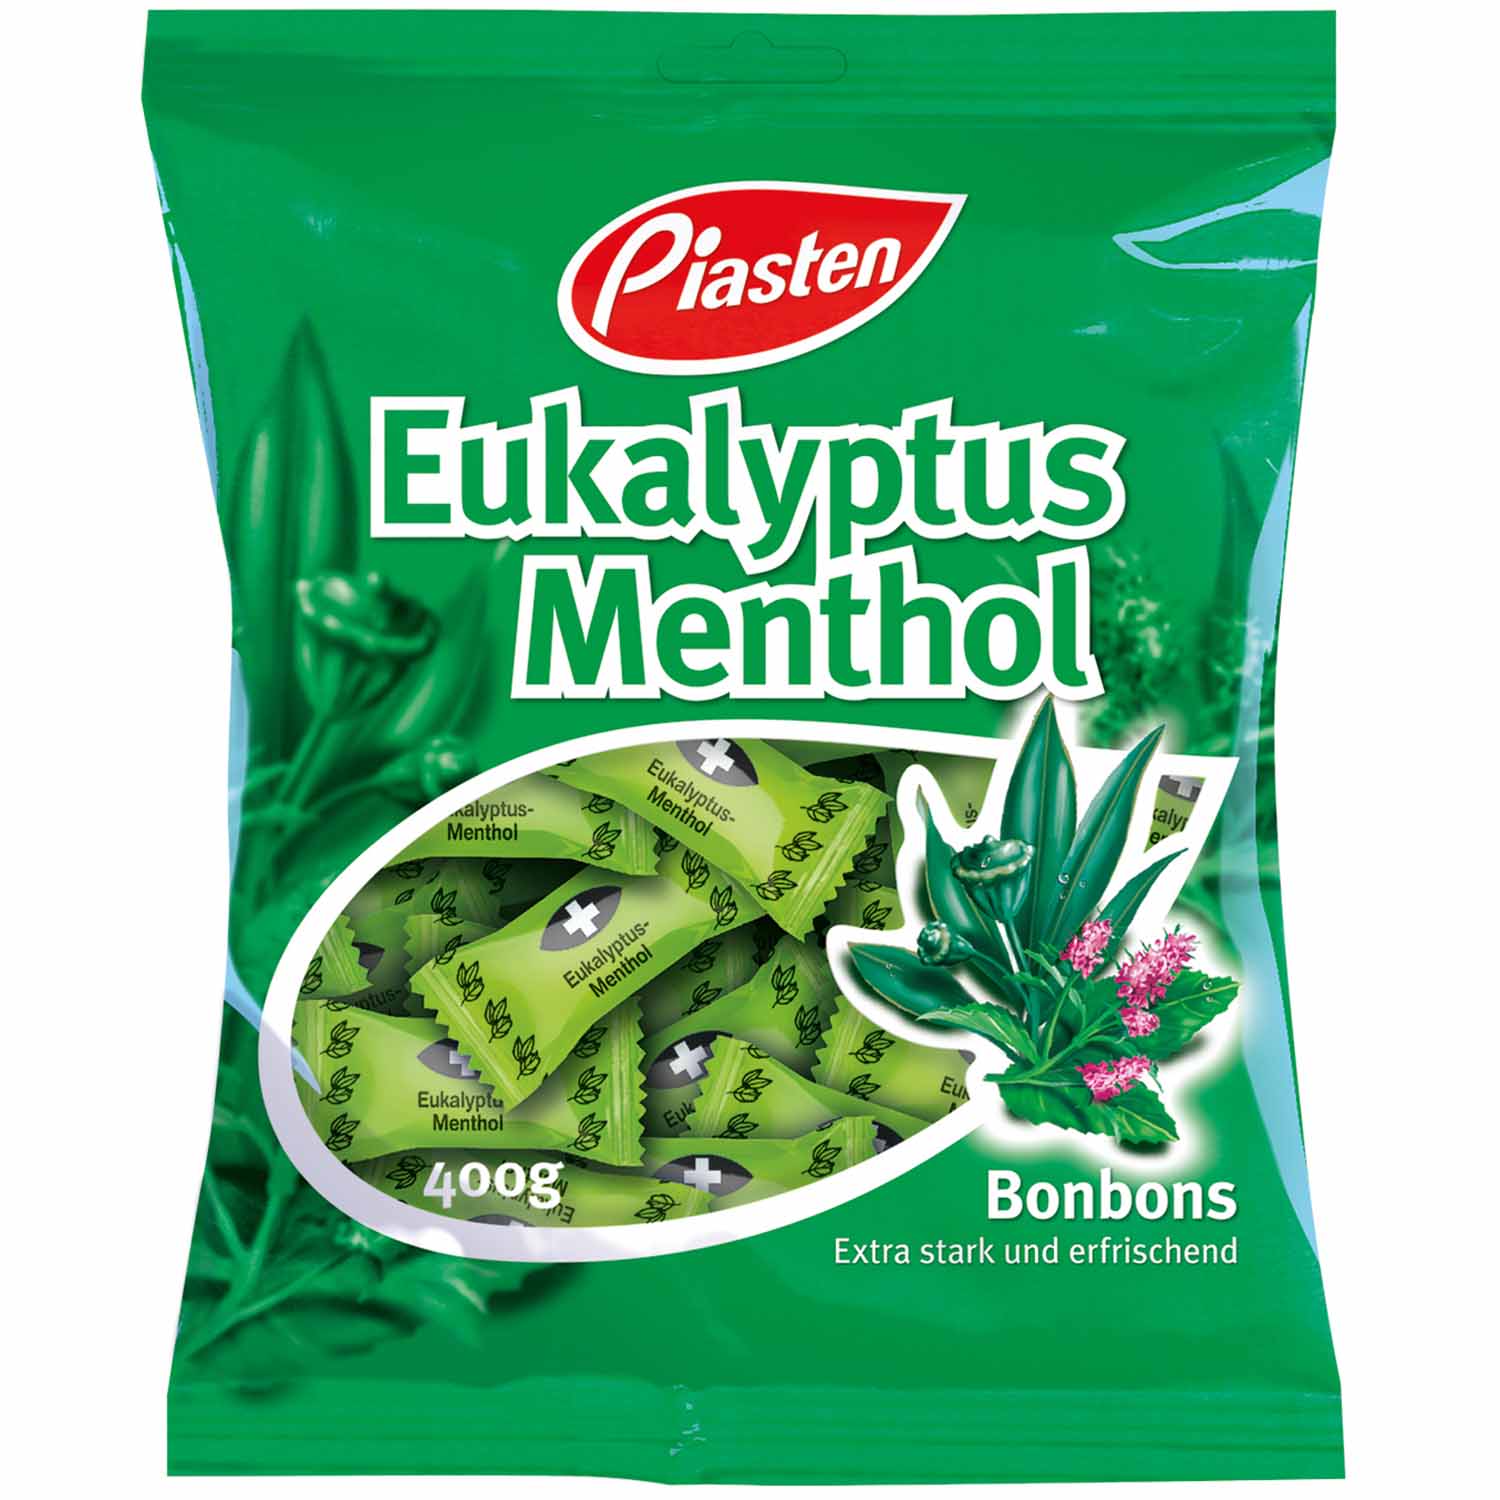 piasten-eukalyptus-menthol-400g-no1-3824.jpg